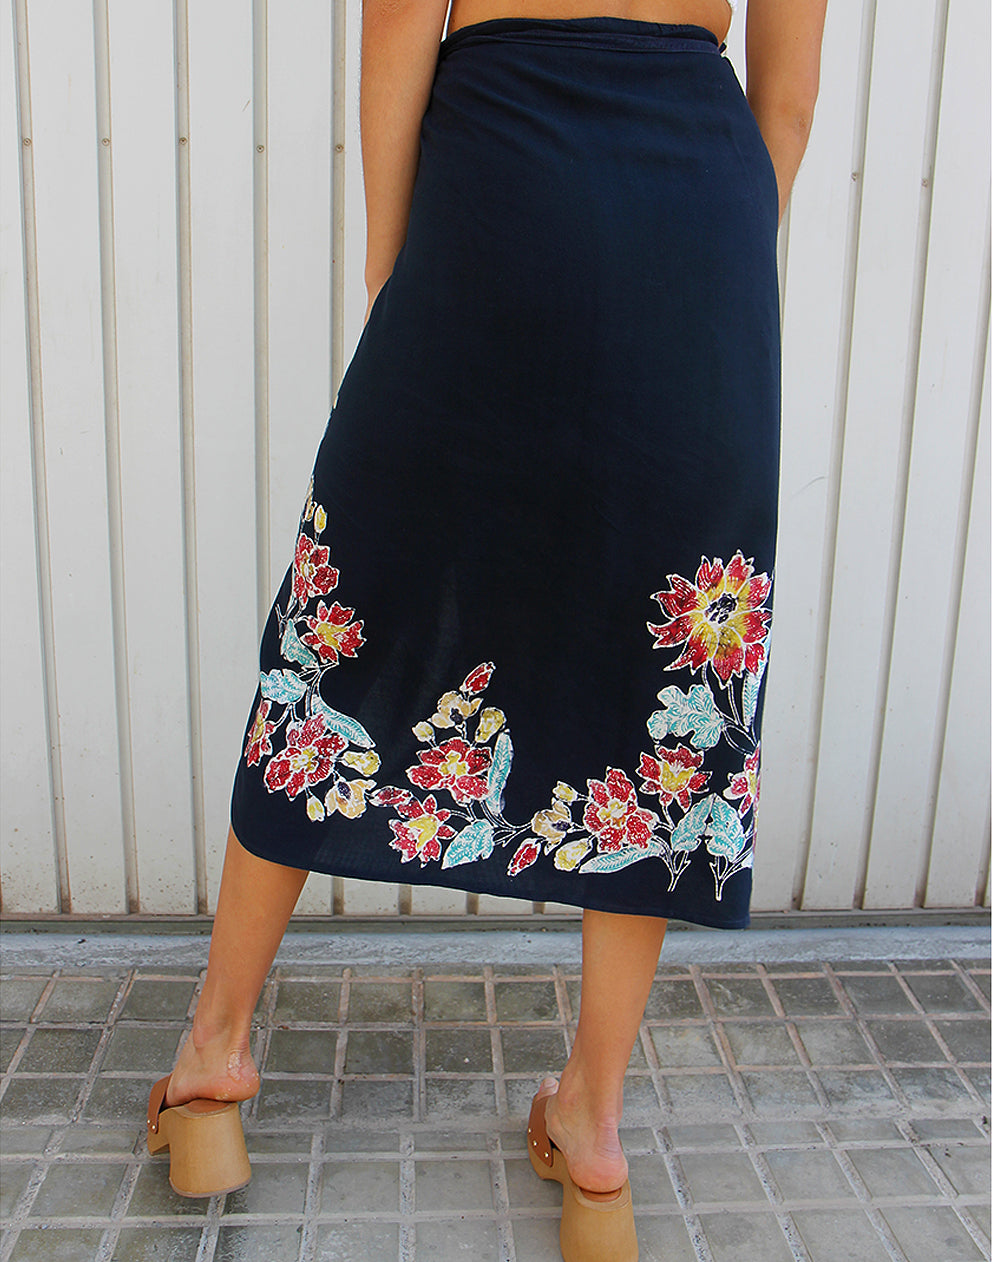 Beach Skirt in Black Floral Print